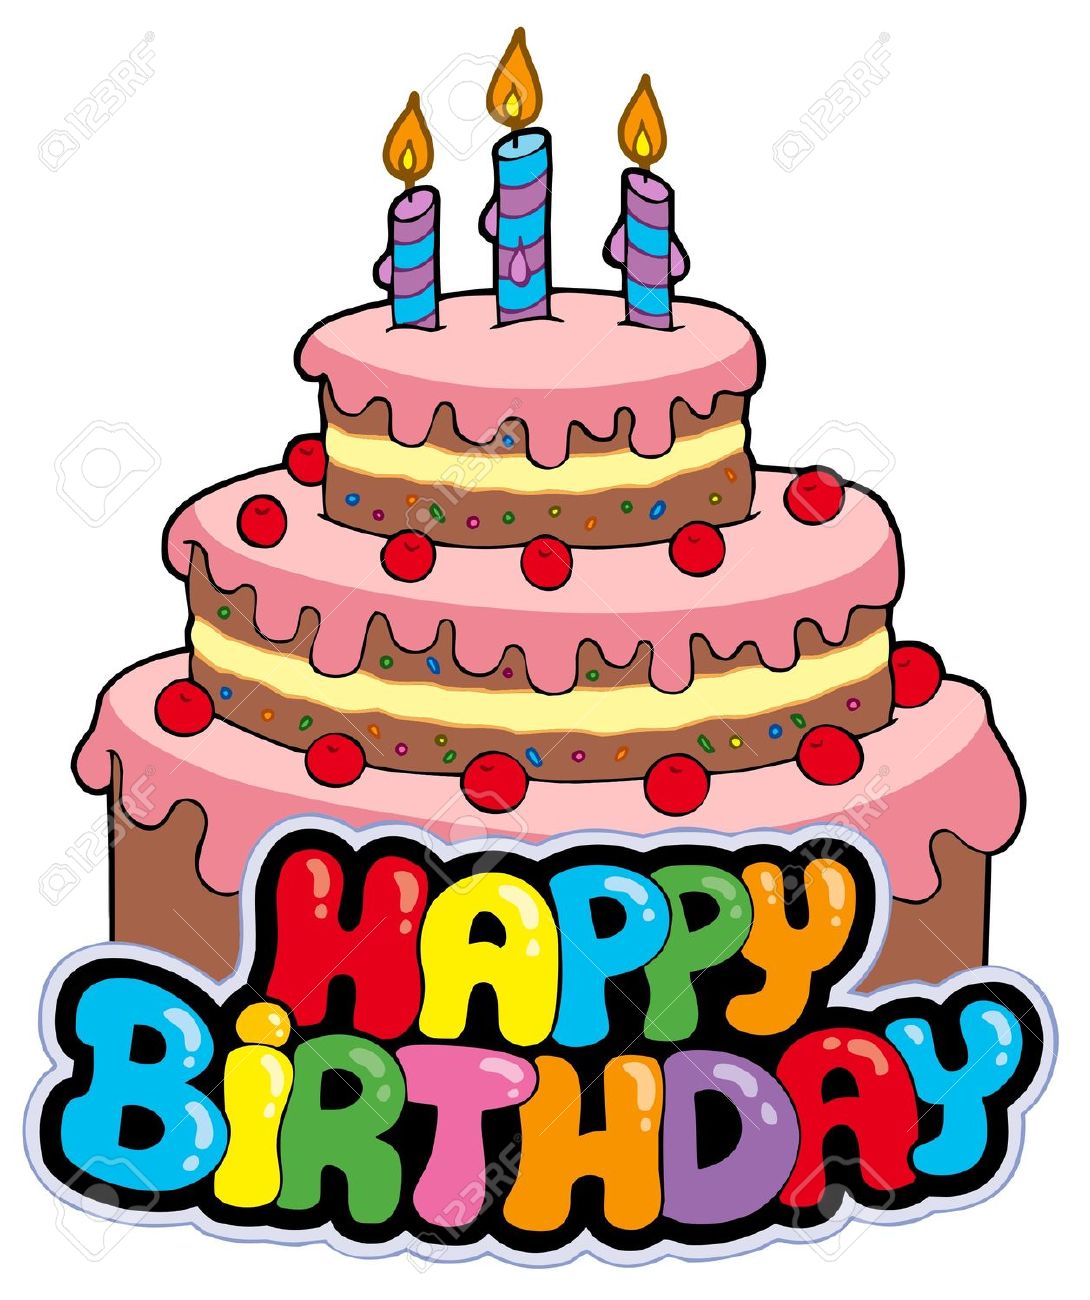 cake clipart happy birthday